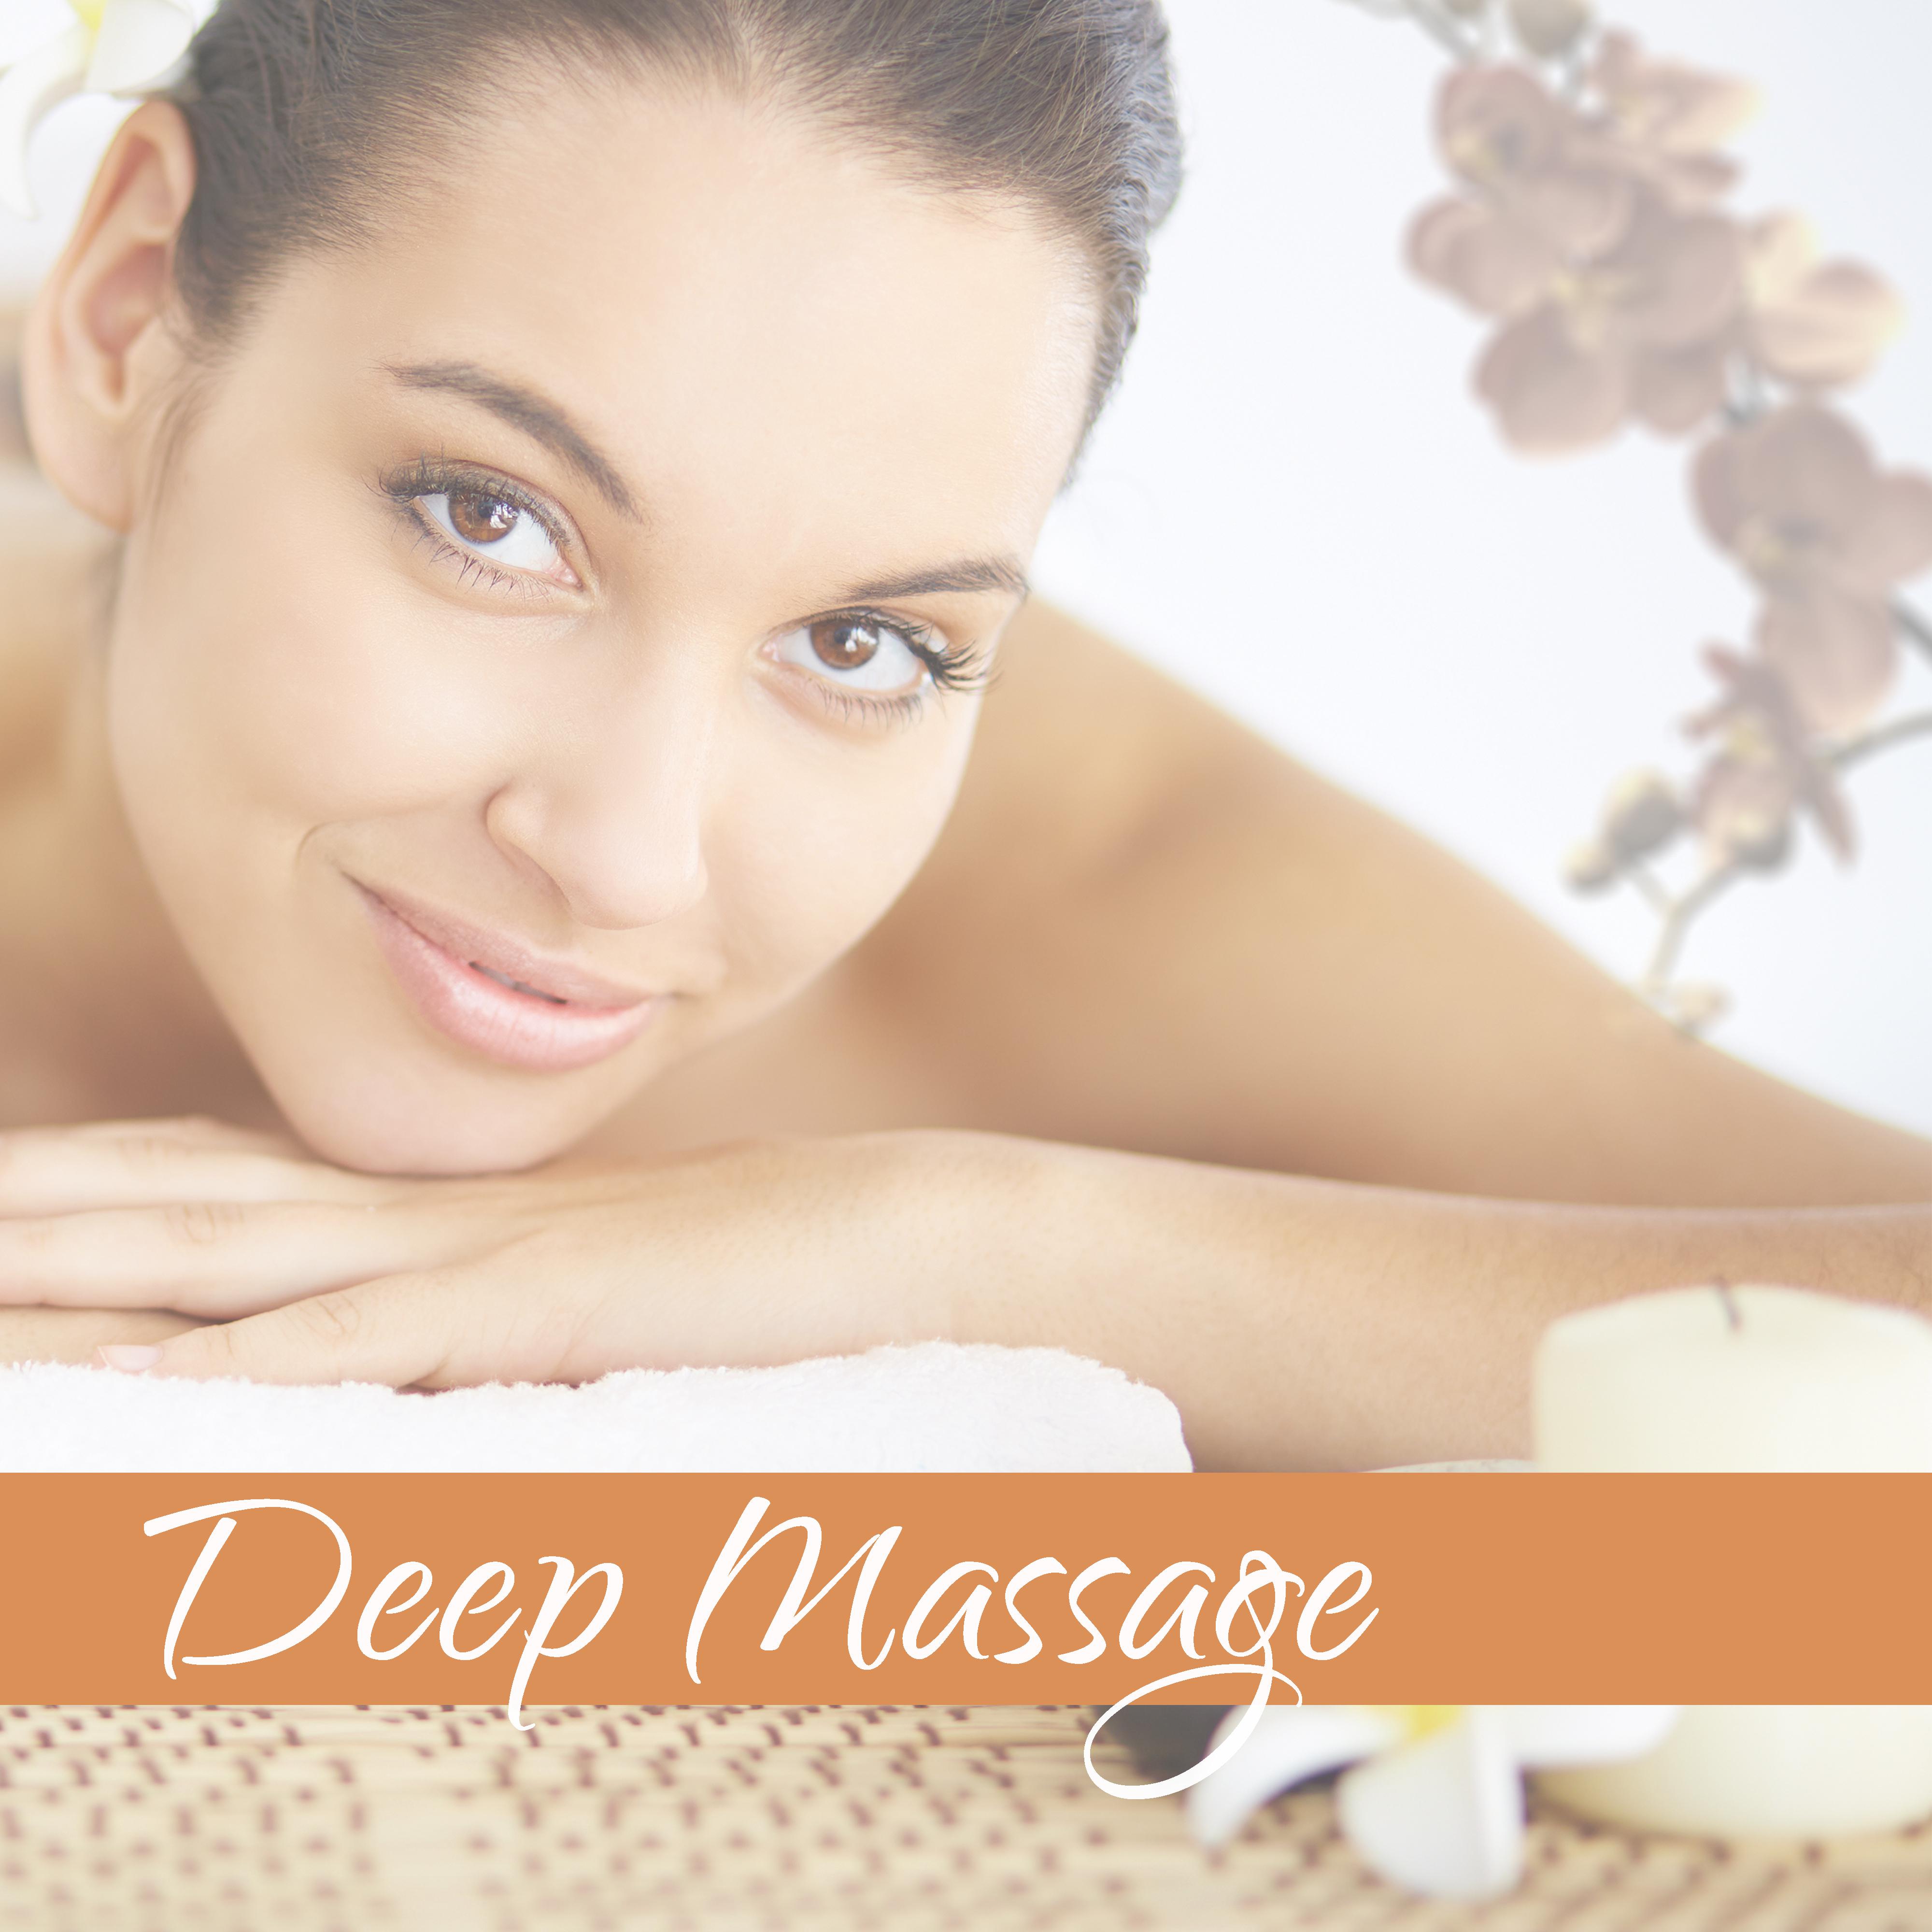 Deep Massage  Wellness Music, Calm Sleep, Bliss Spa, Relaxation, Massage Therapy, Rest